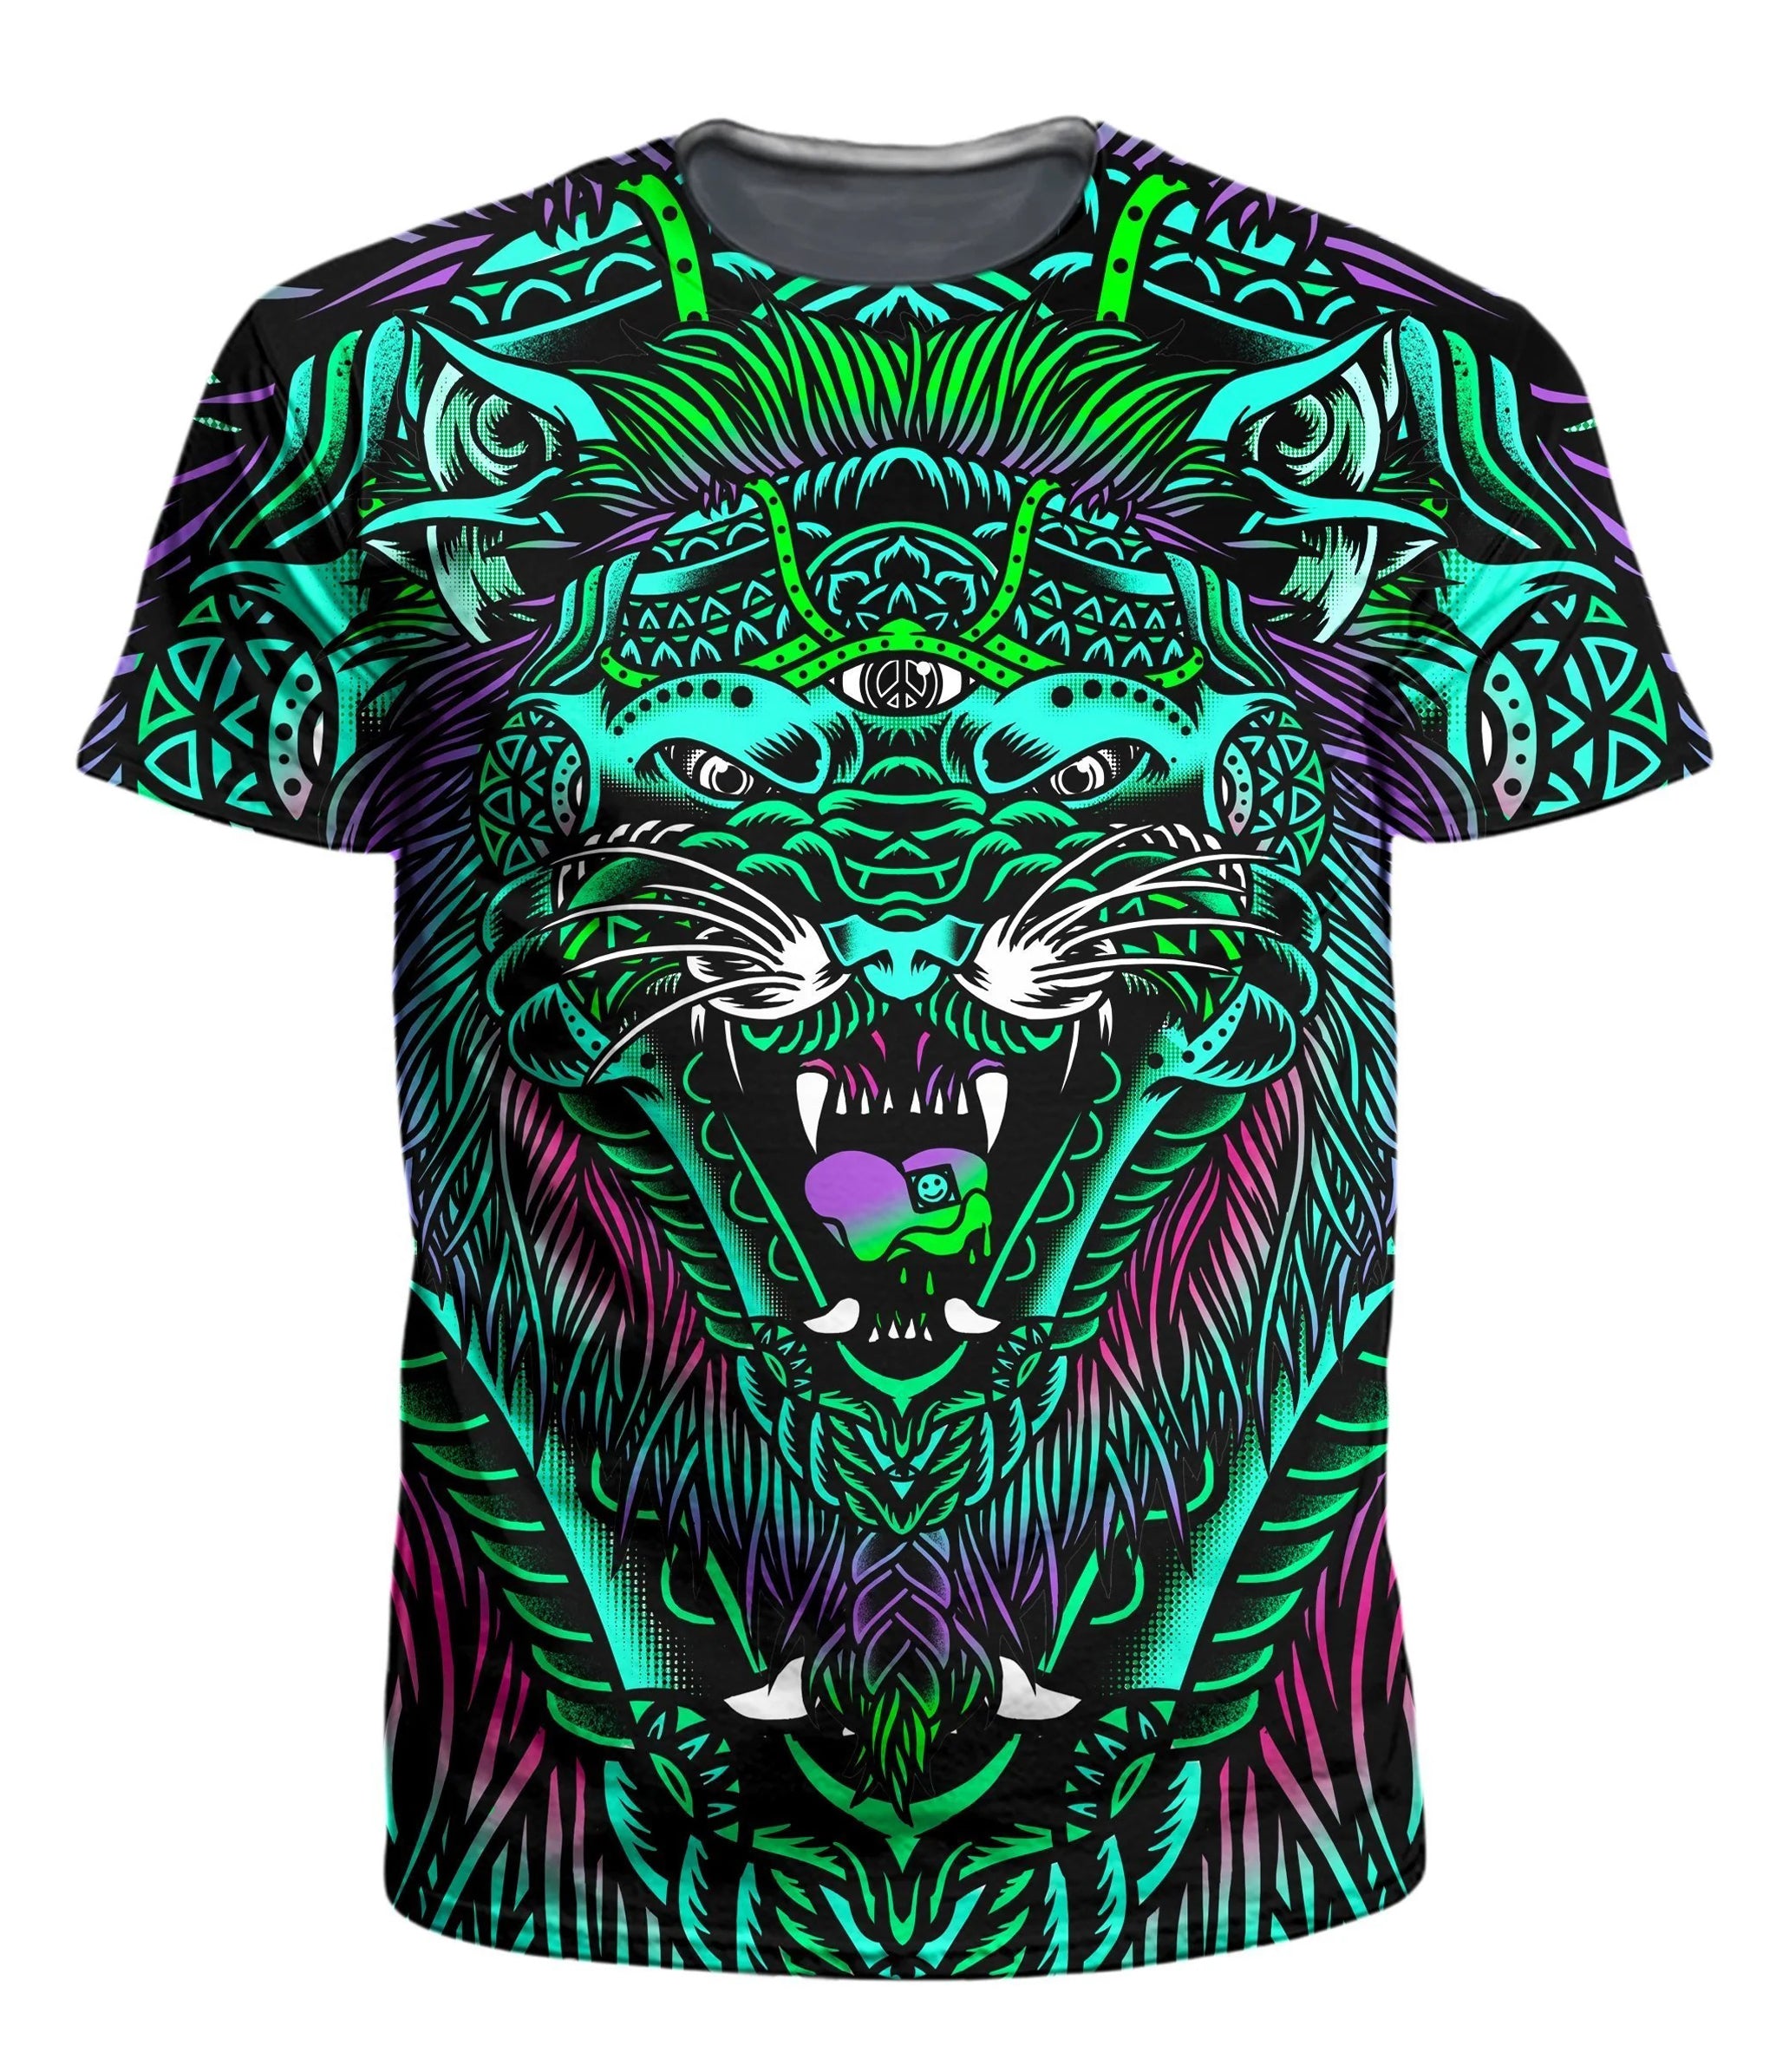 Acid Tiger Men's T-Shirt by Set 4 Lyfe in Black - X-Large - Short Sleeve - Rave Gear - iEDM